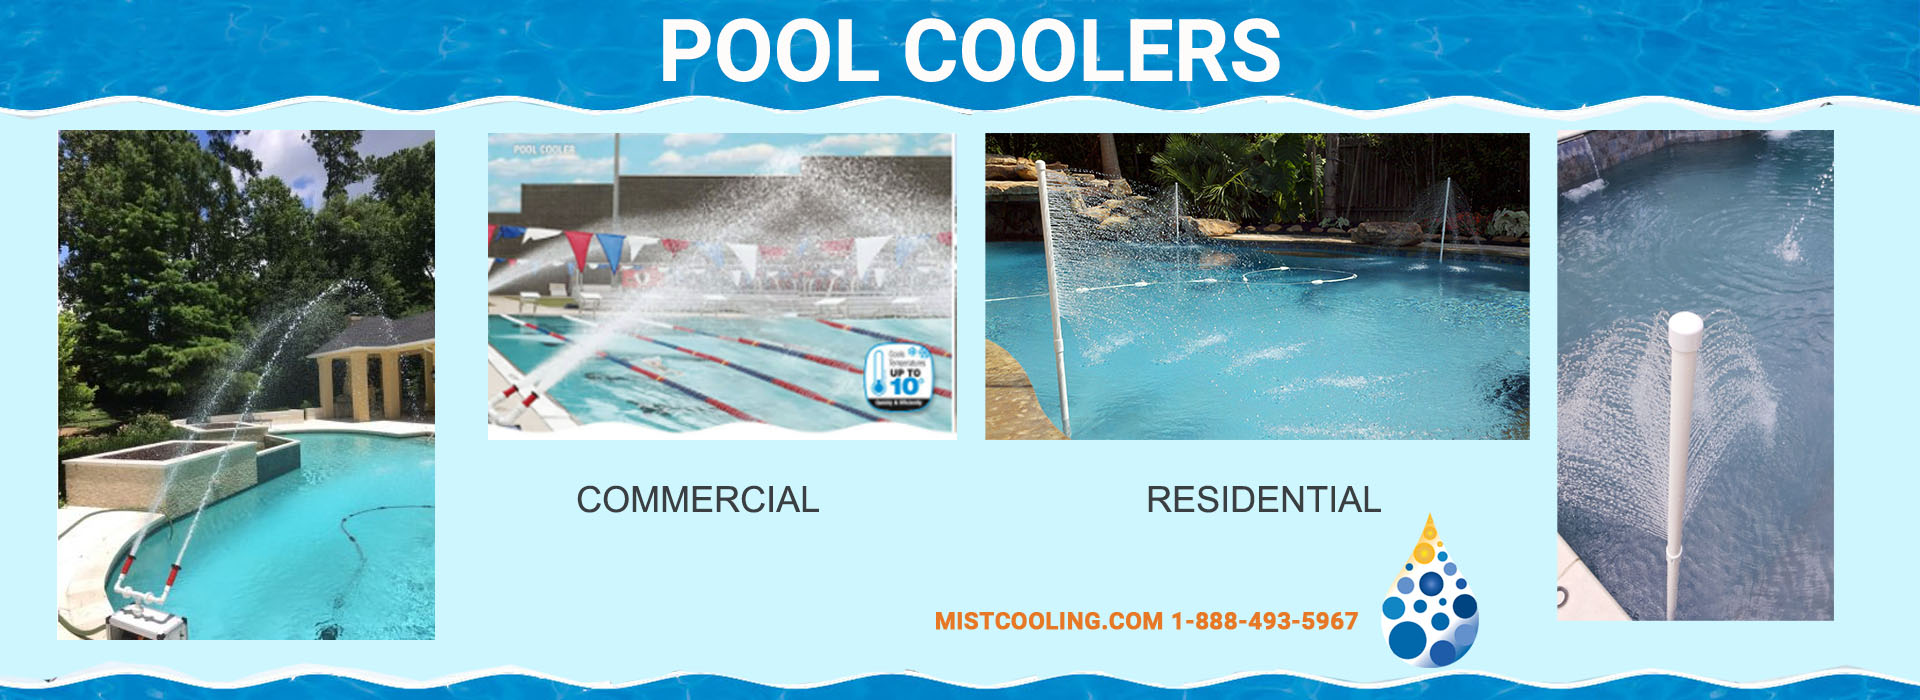 Pool Cooler